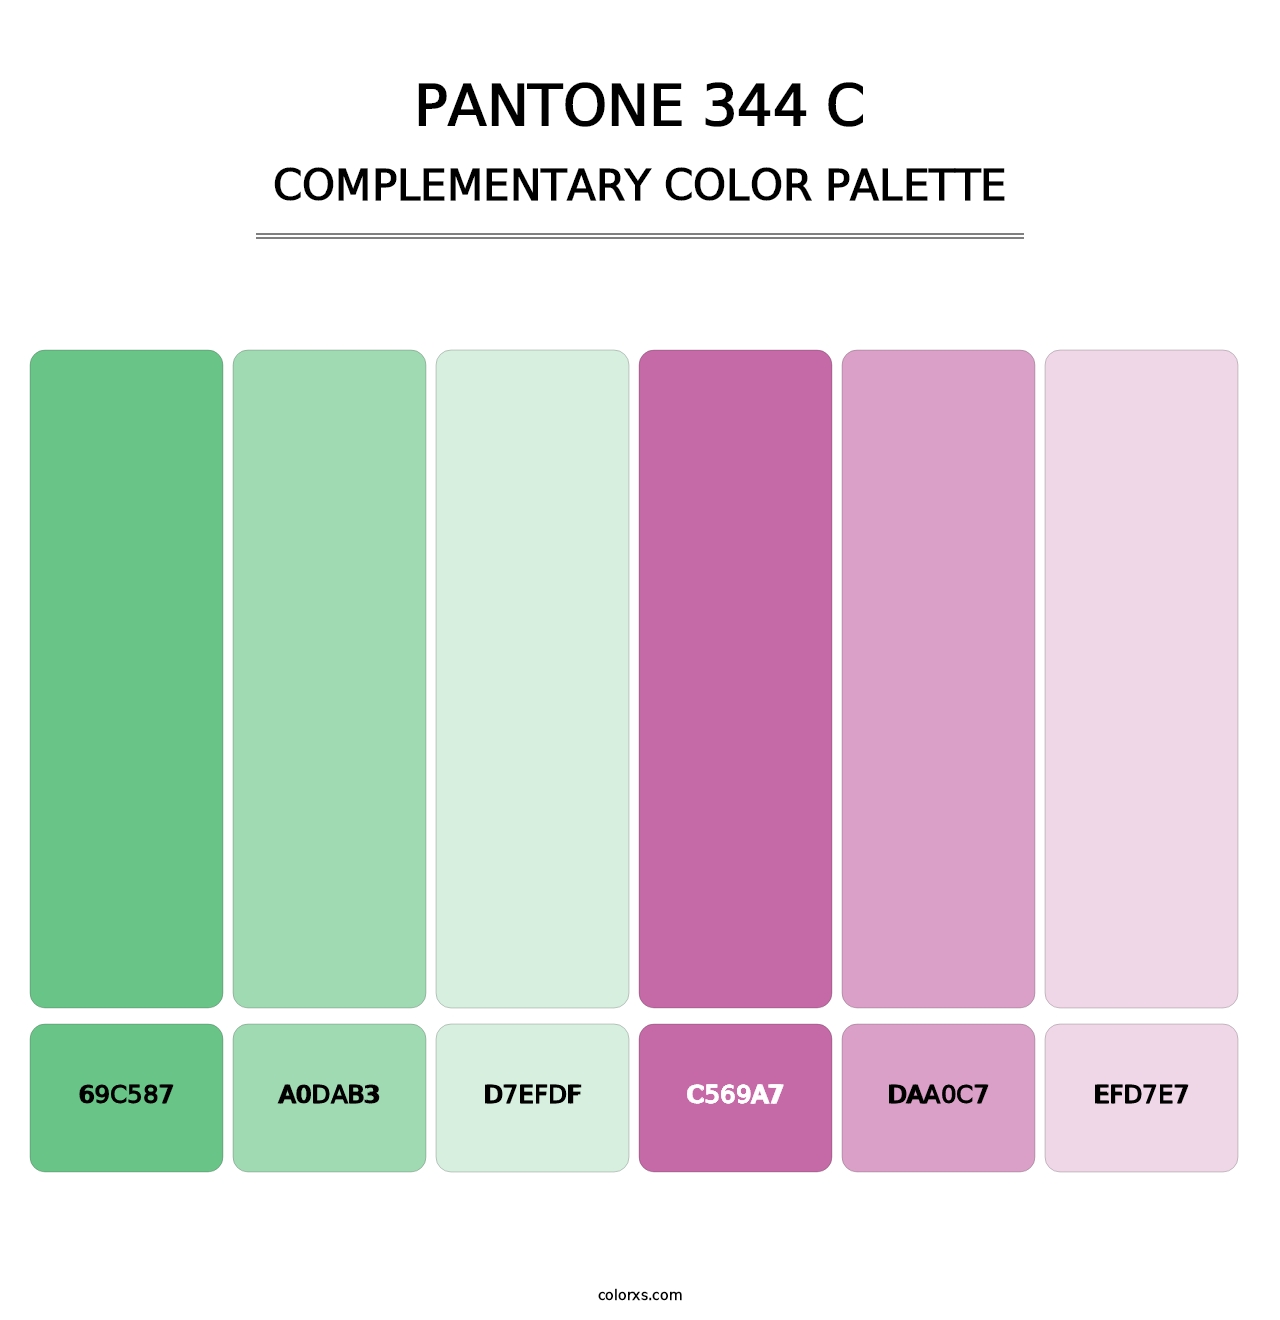 PANTONE 344 C - Complementary Color Palette